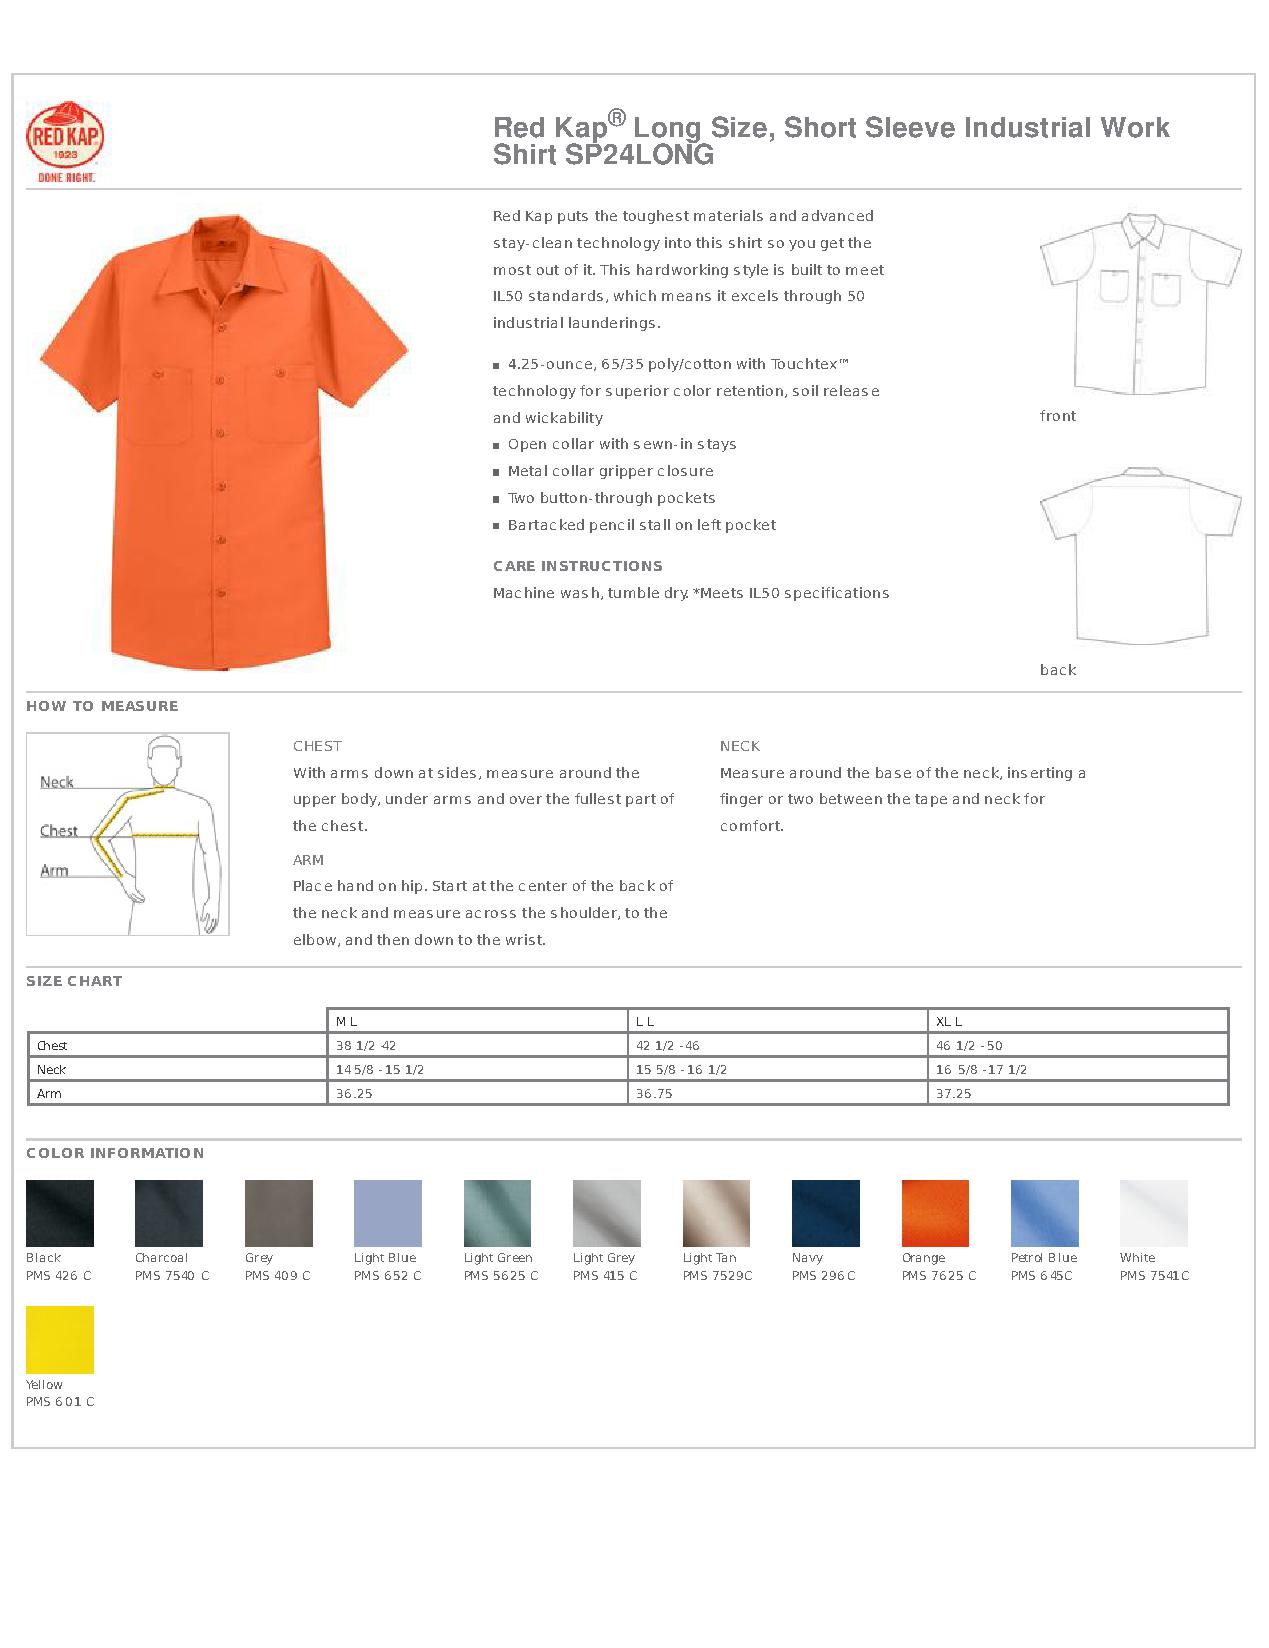 Red Kap Clothing Size Chart